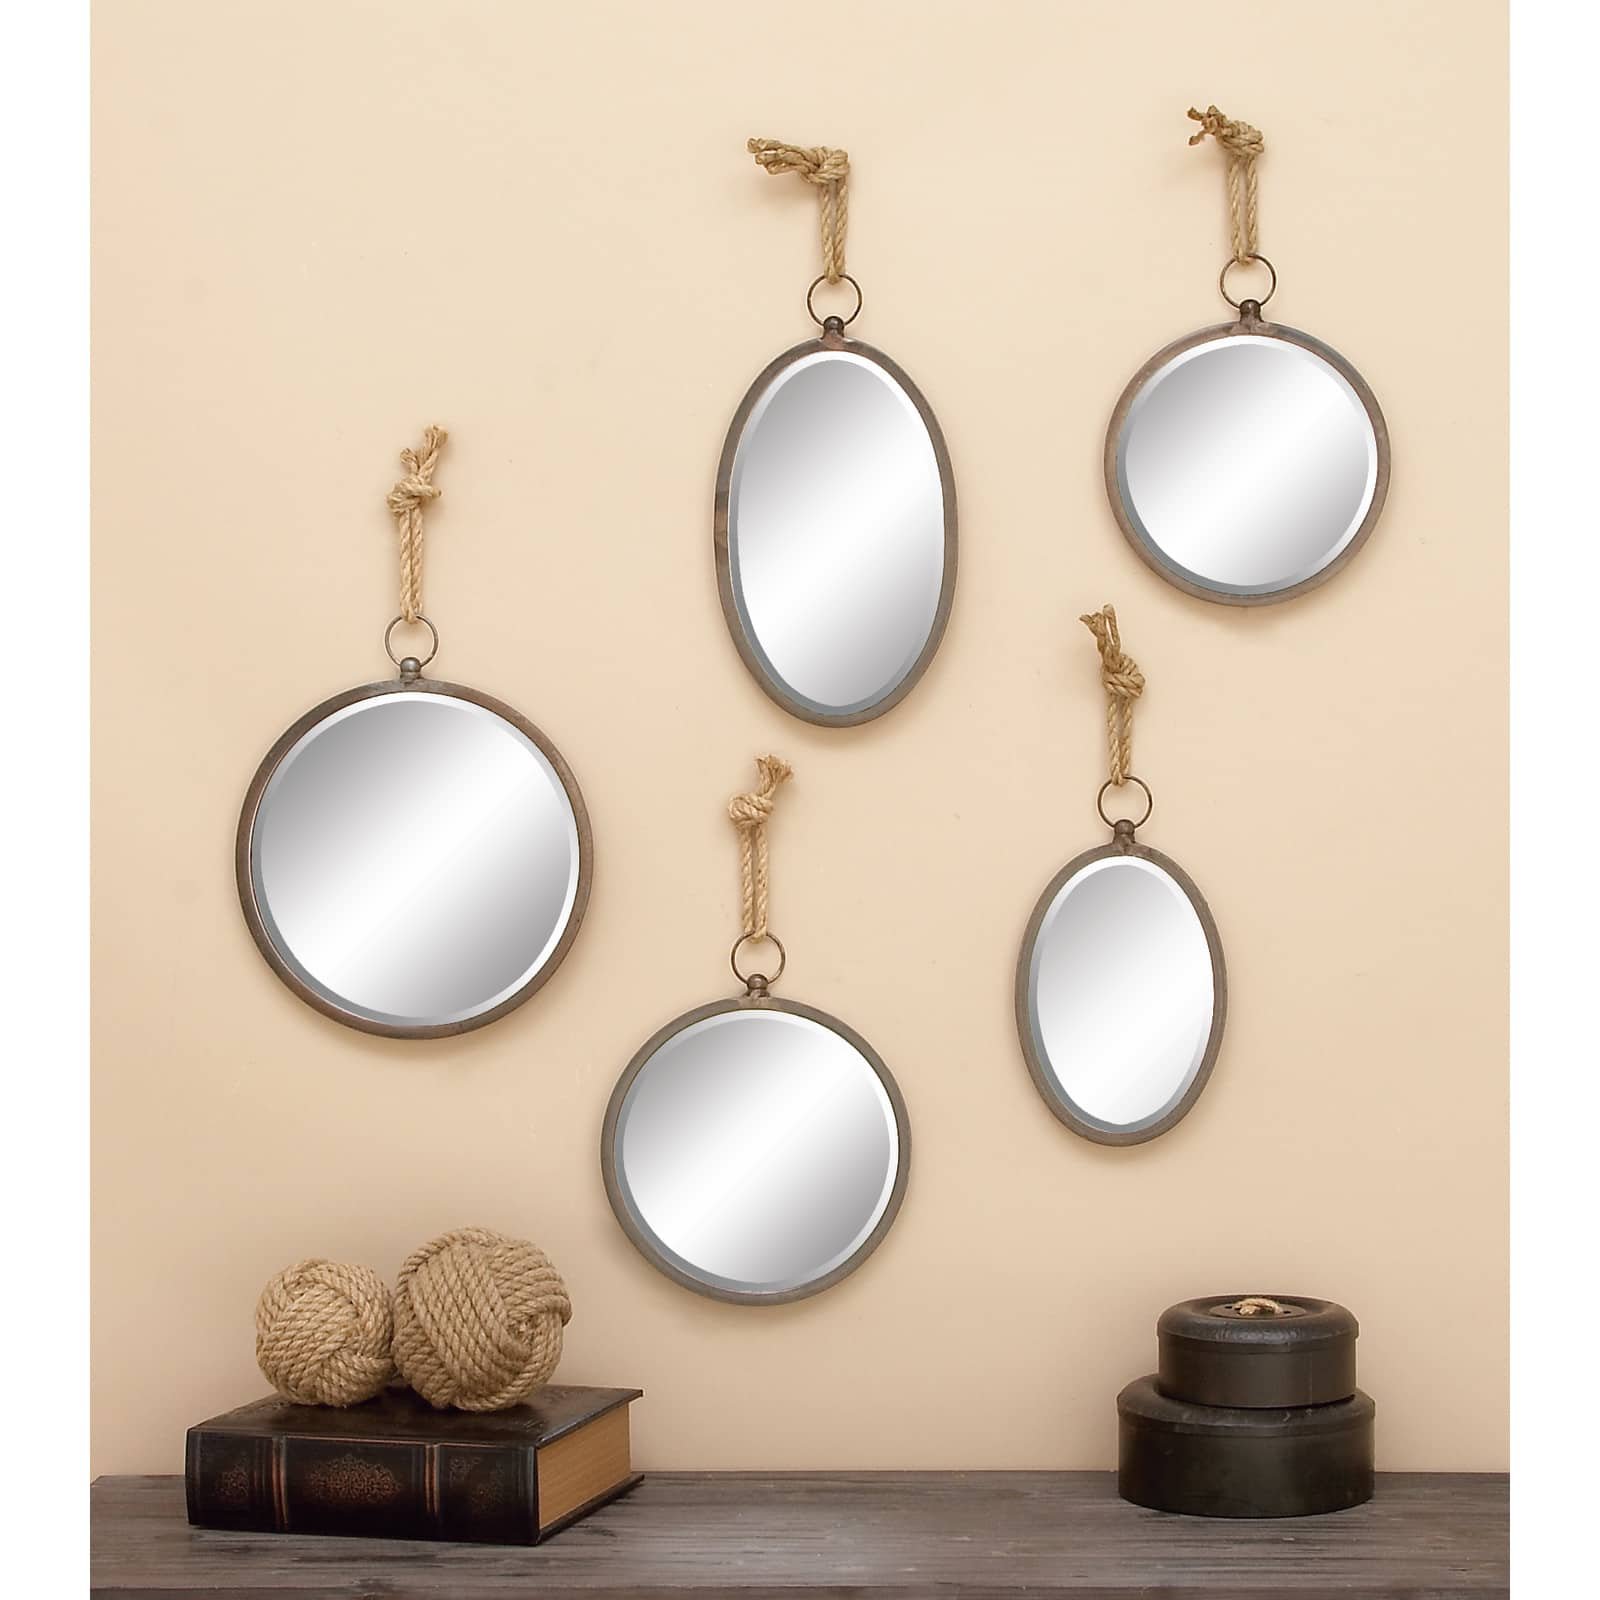 Gray Metal Glam Hanging Wall Mirrors, 5ct.